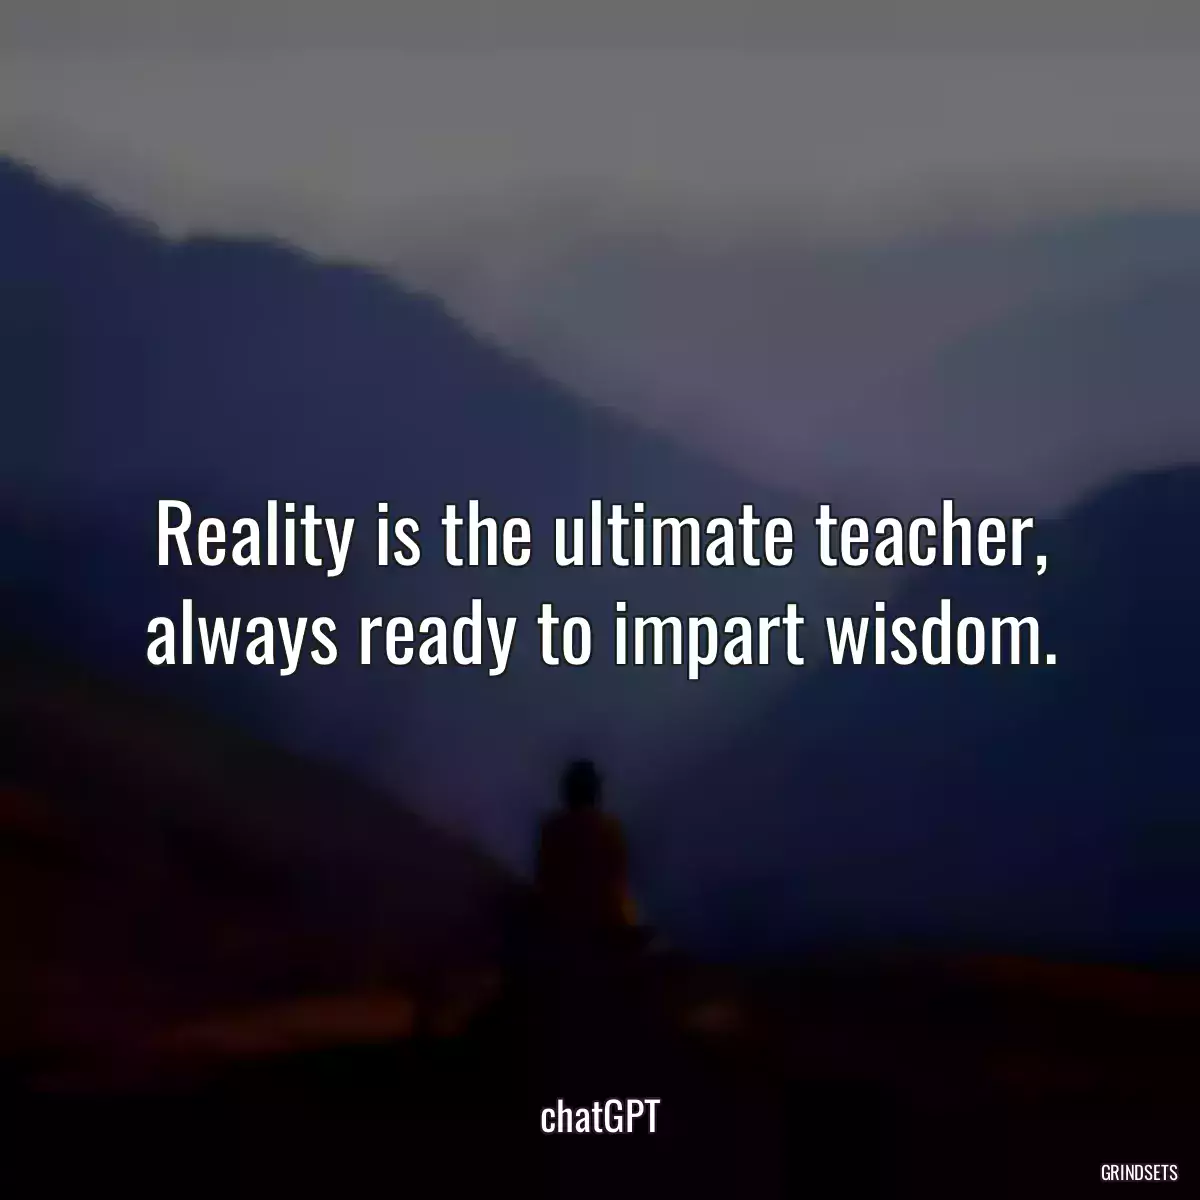 Reality is the ultimate teacher, always ready to impart wisdom.